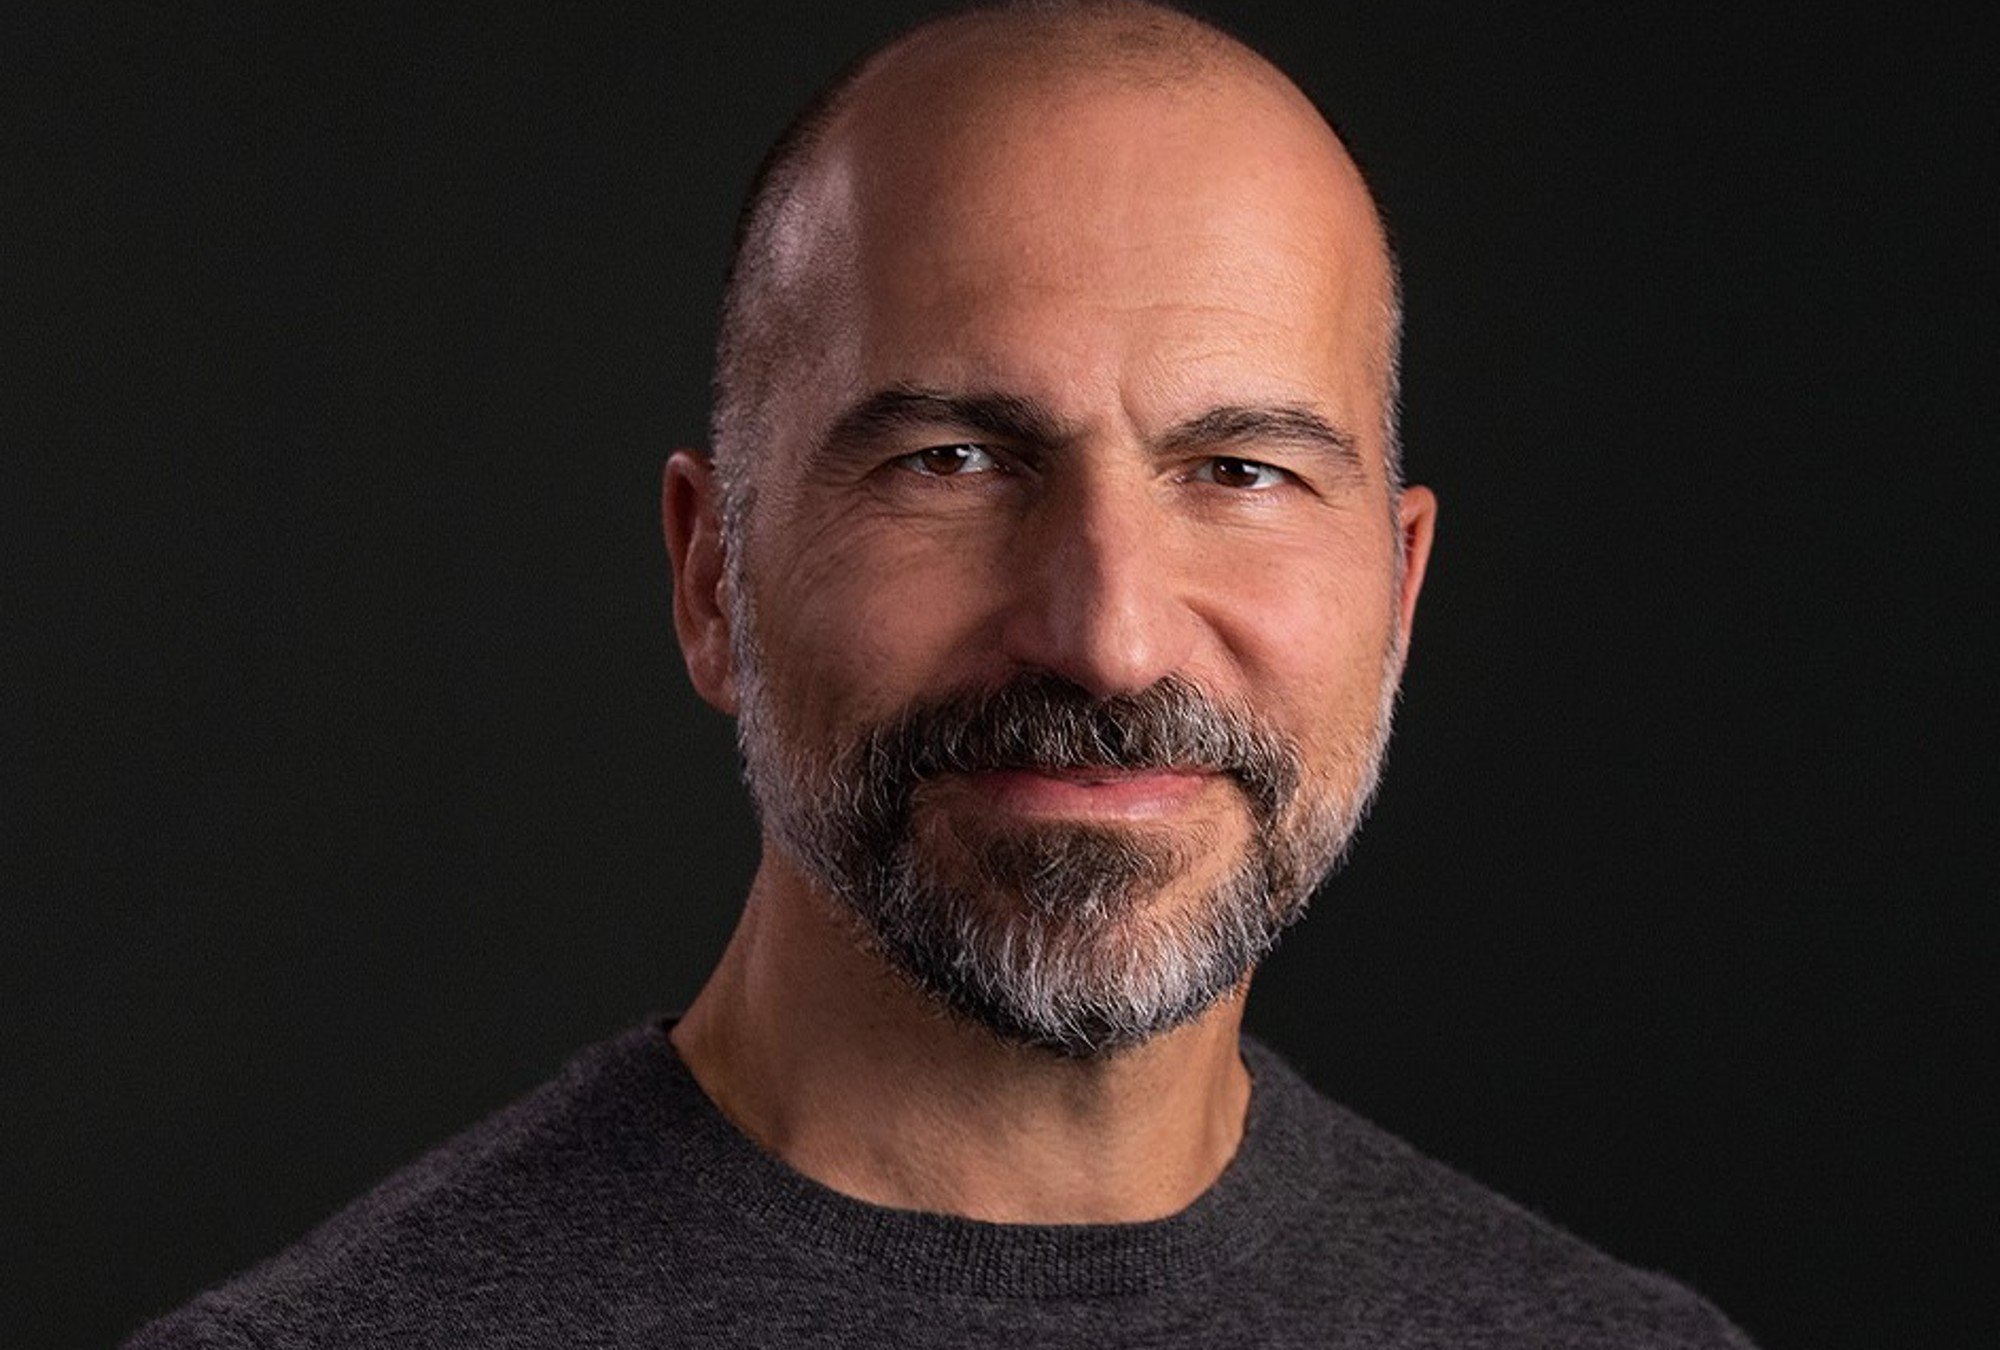 Dara Khosrowshahi, CEO de Uber